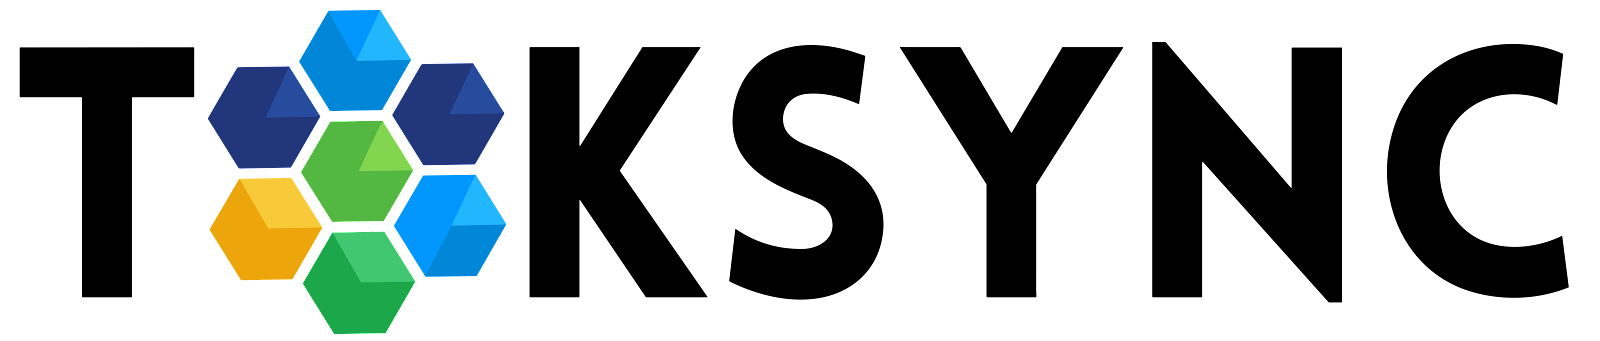 TokSync logo